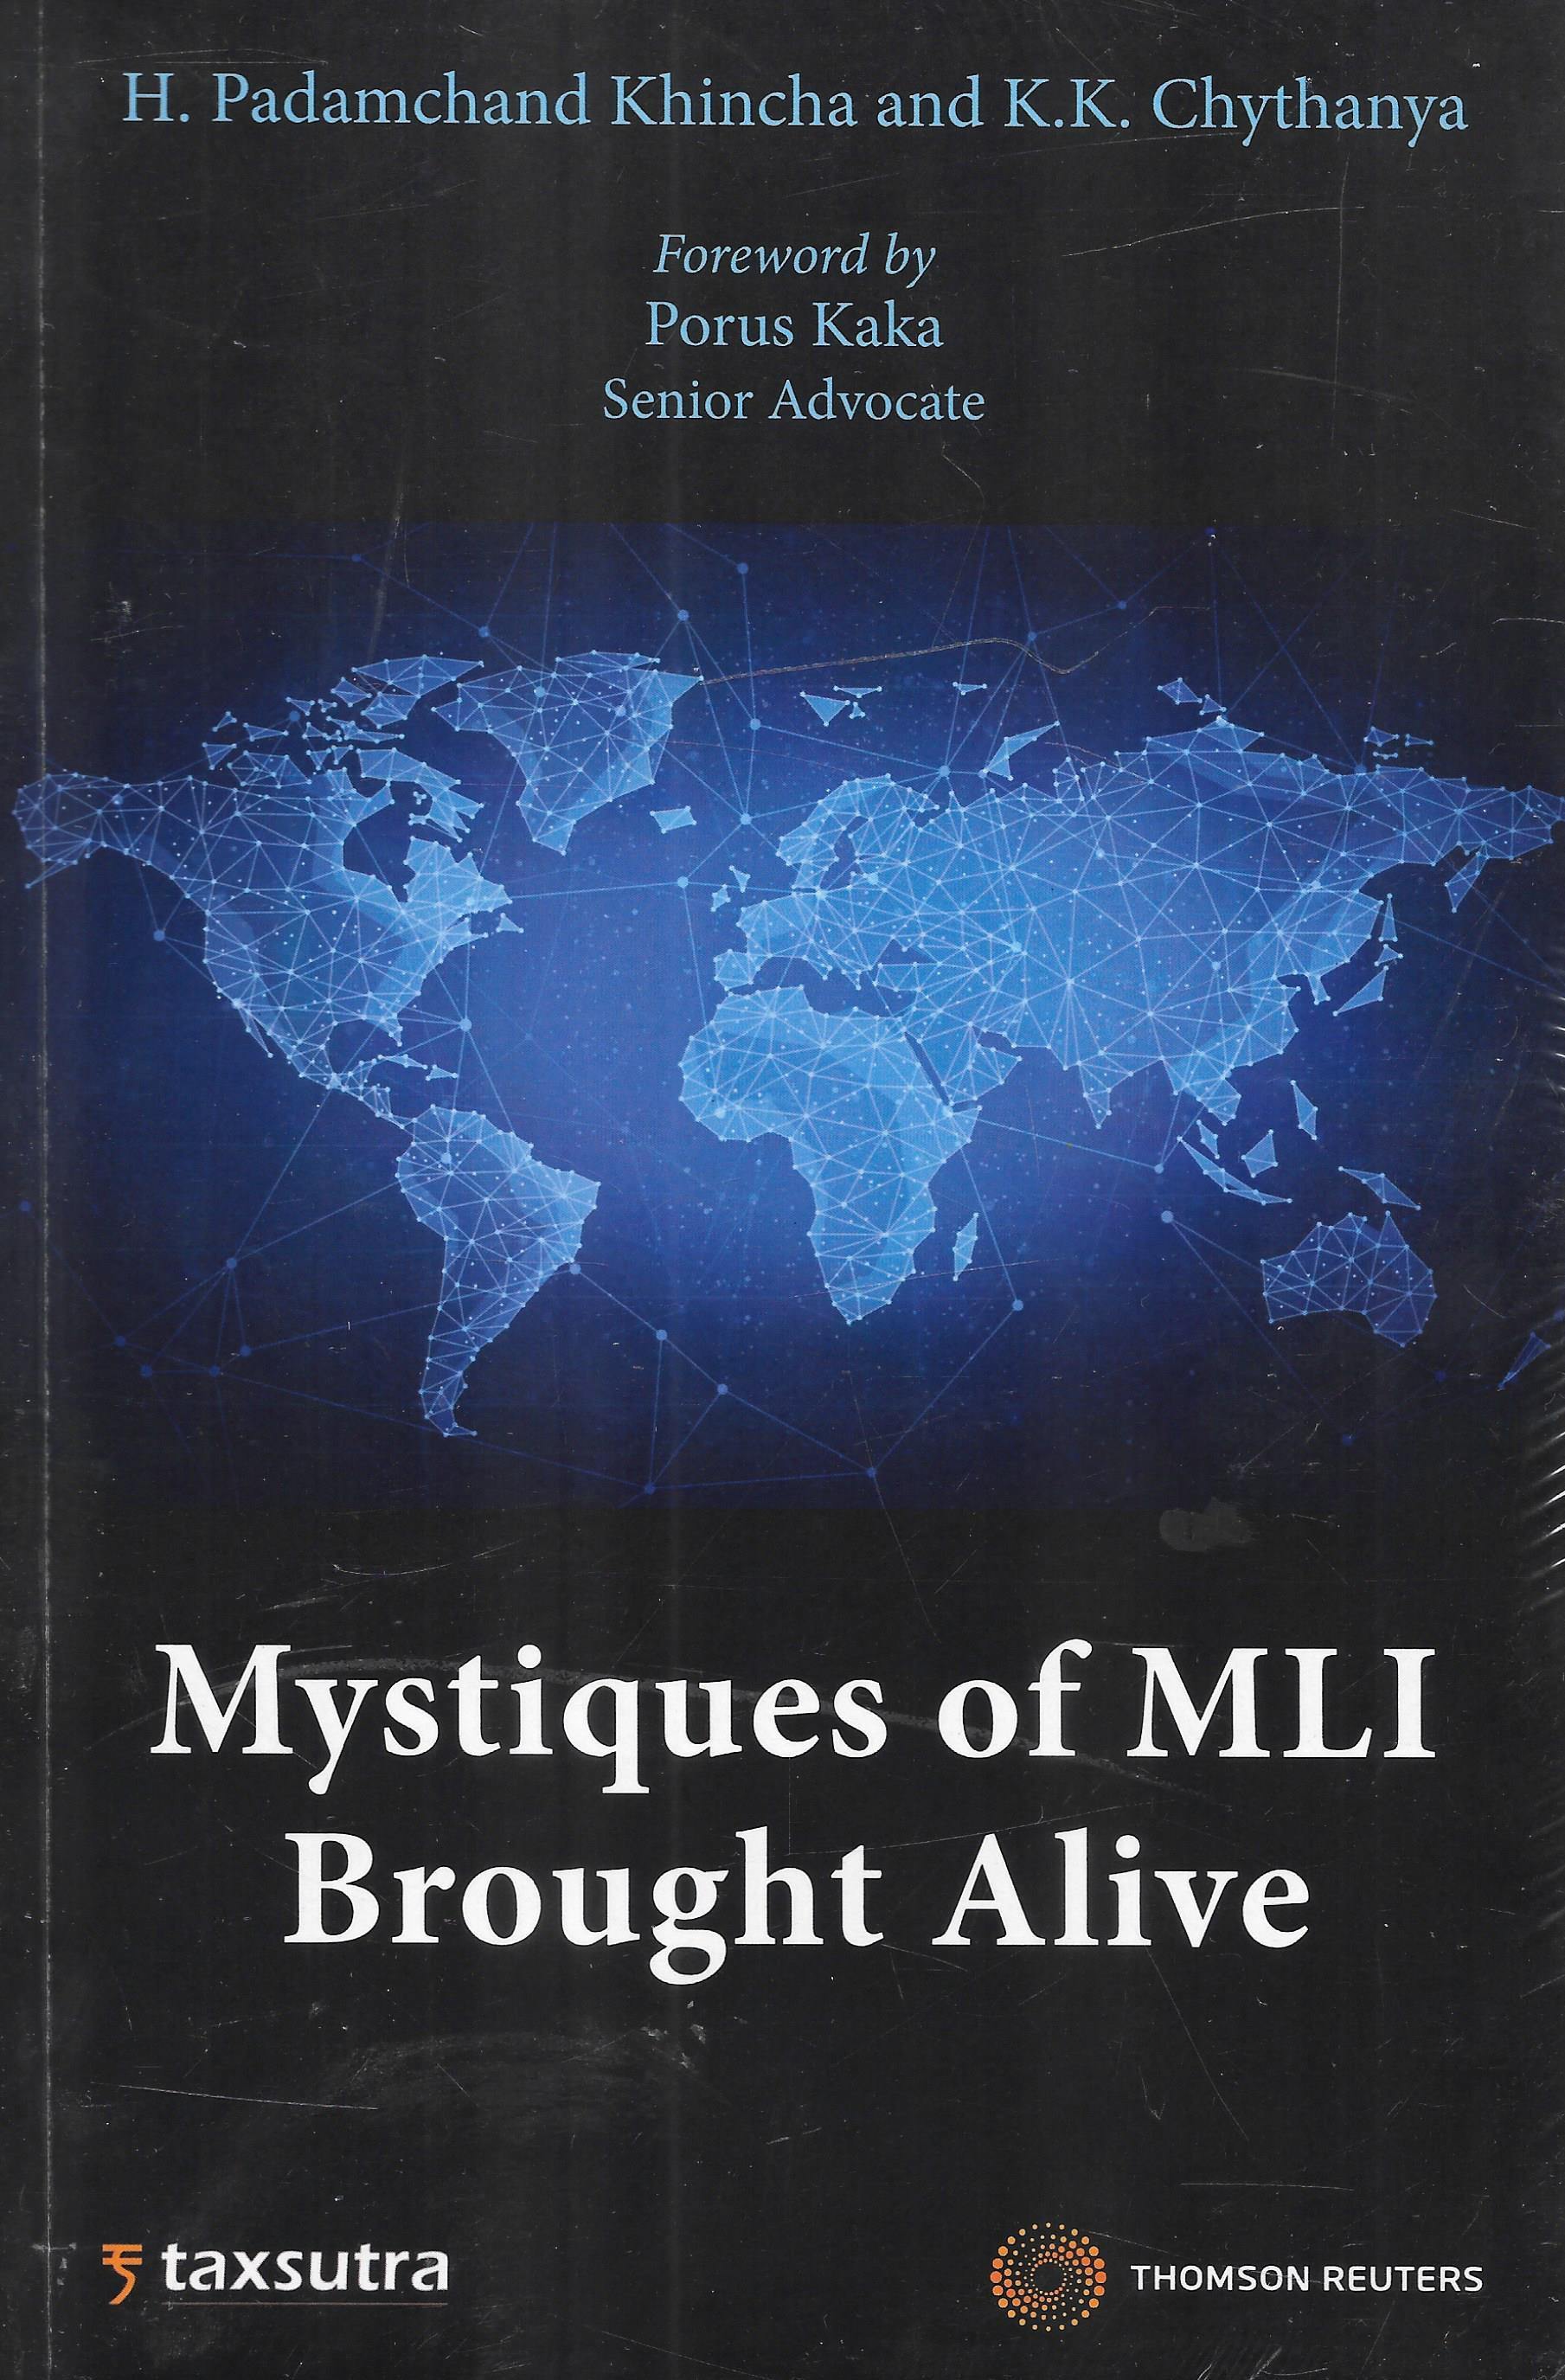 Mystiques of MLI brought Alive - M&J Services